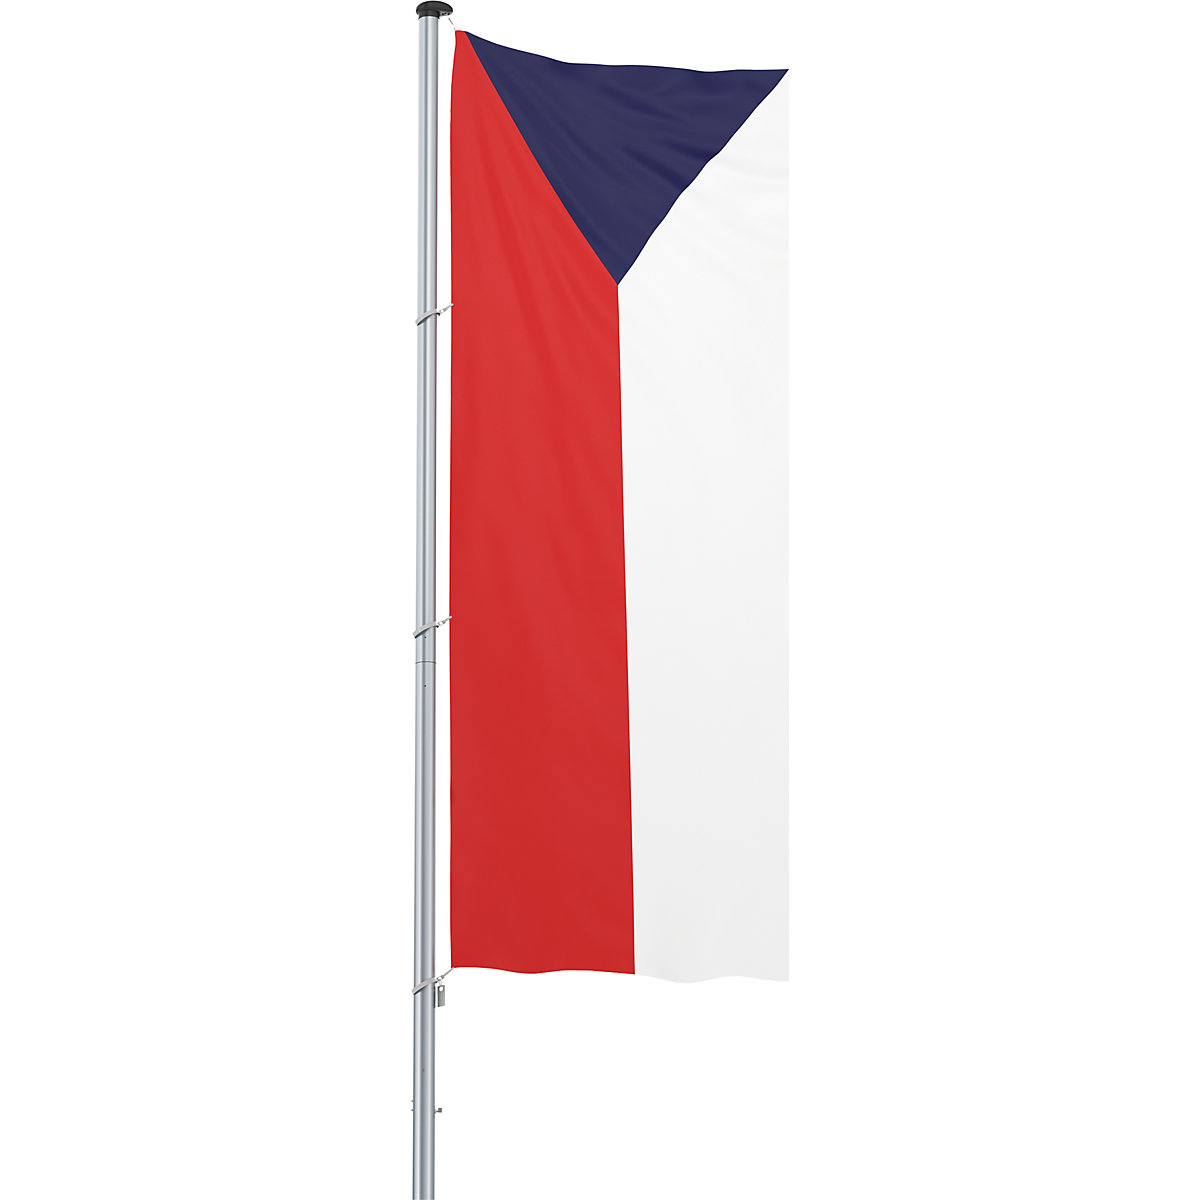 Zastava/nacionalna zastava – Mannus, format 1,2 x 3 m, Češka